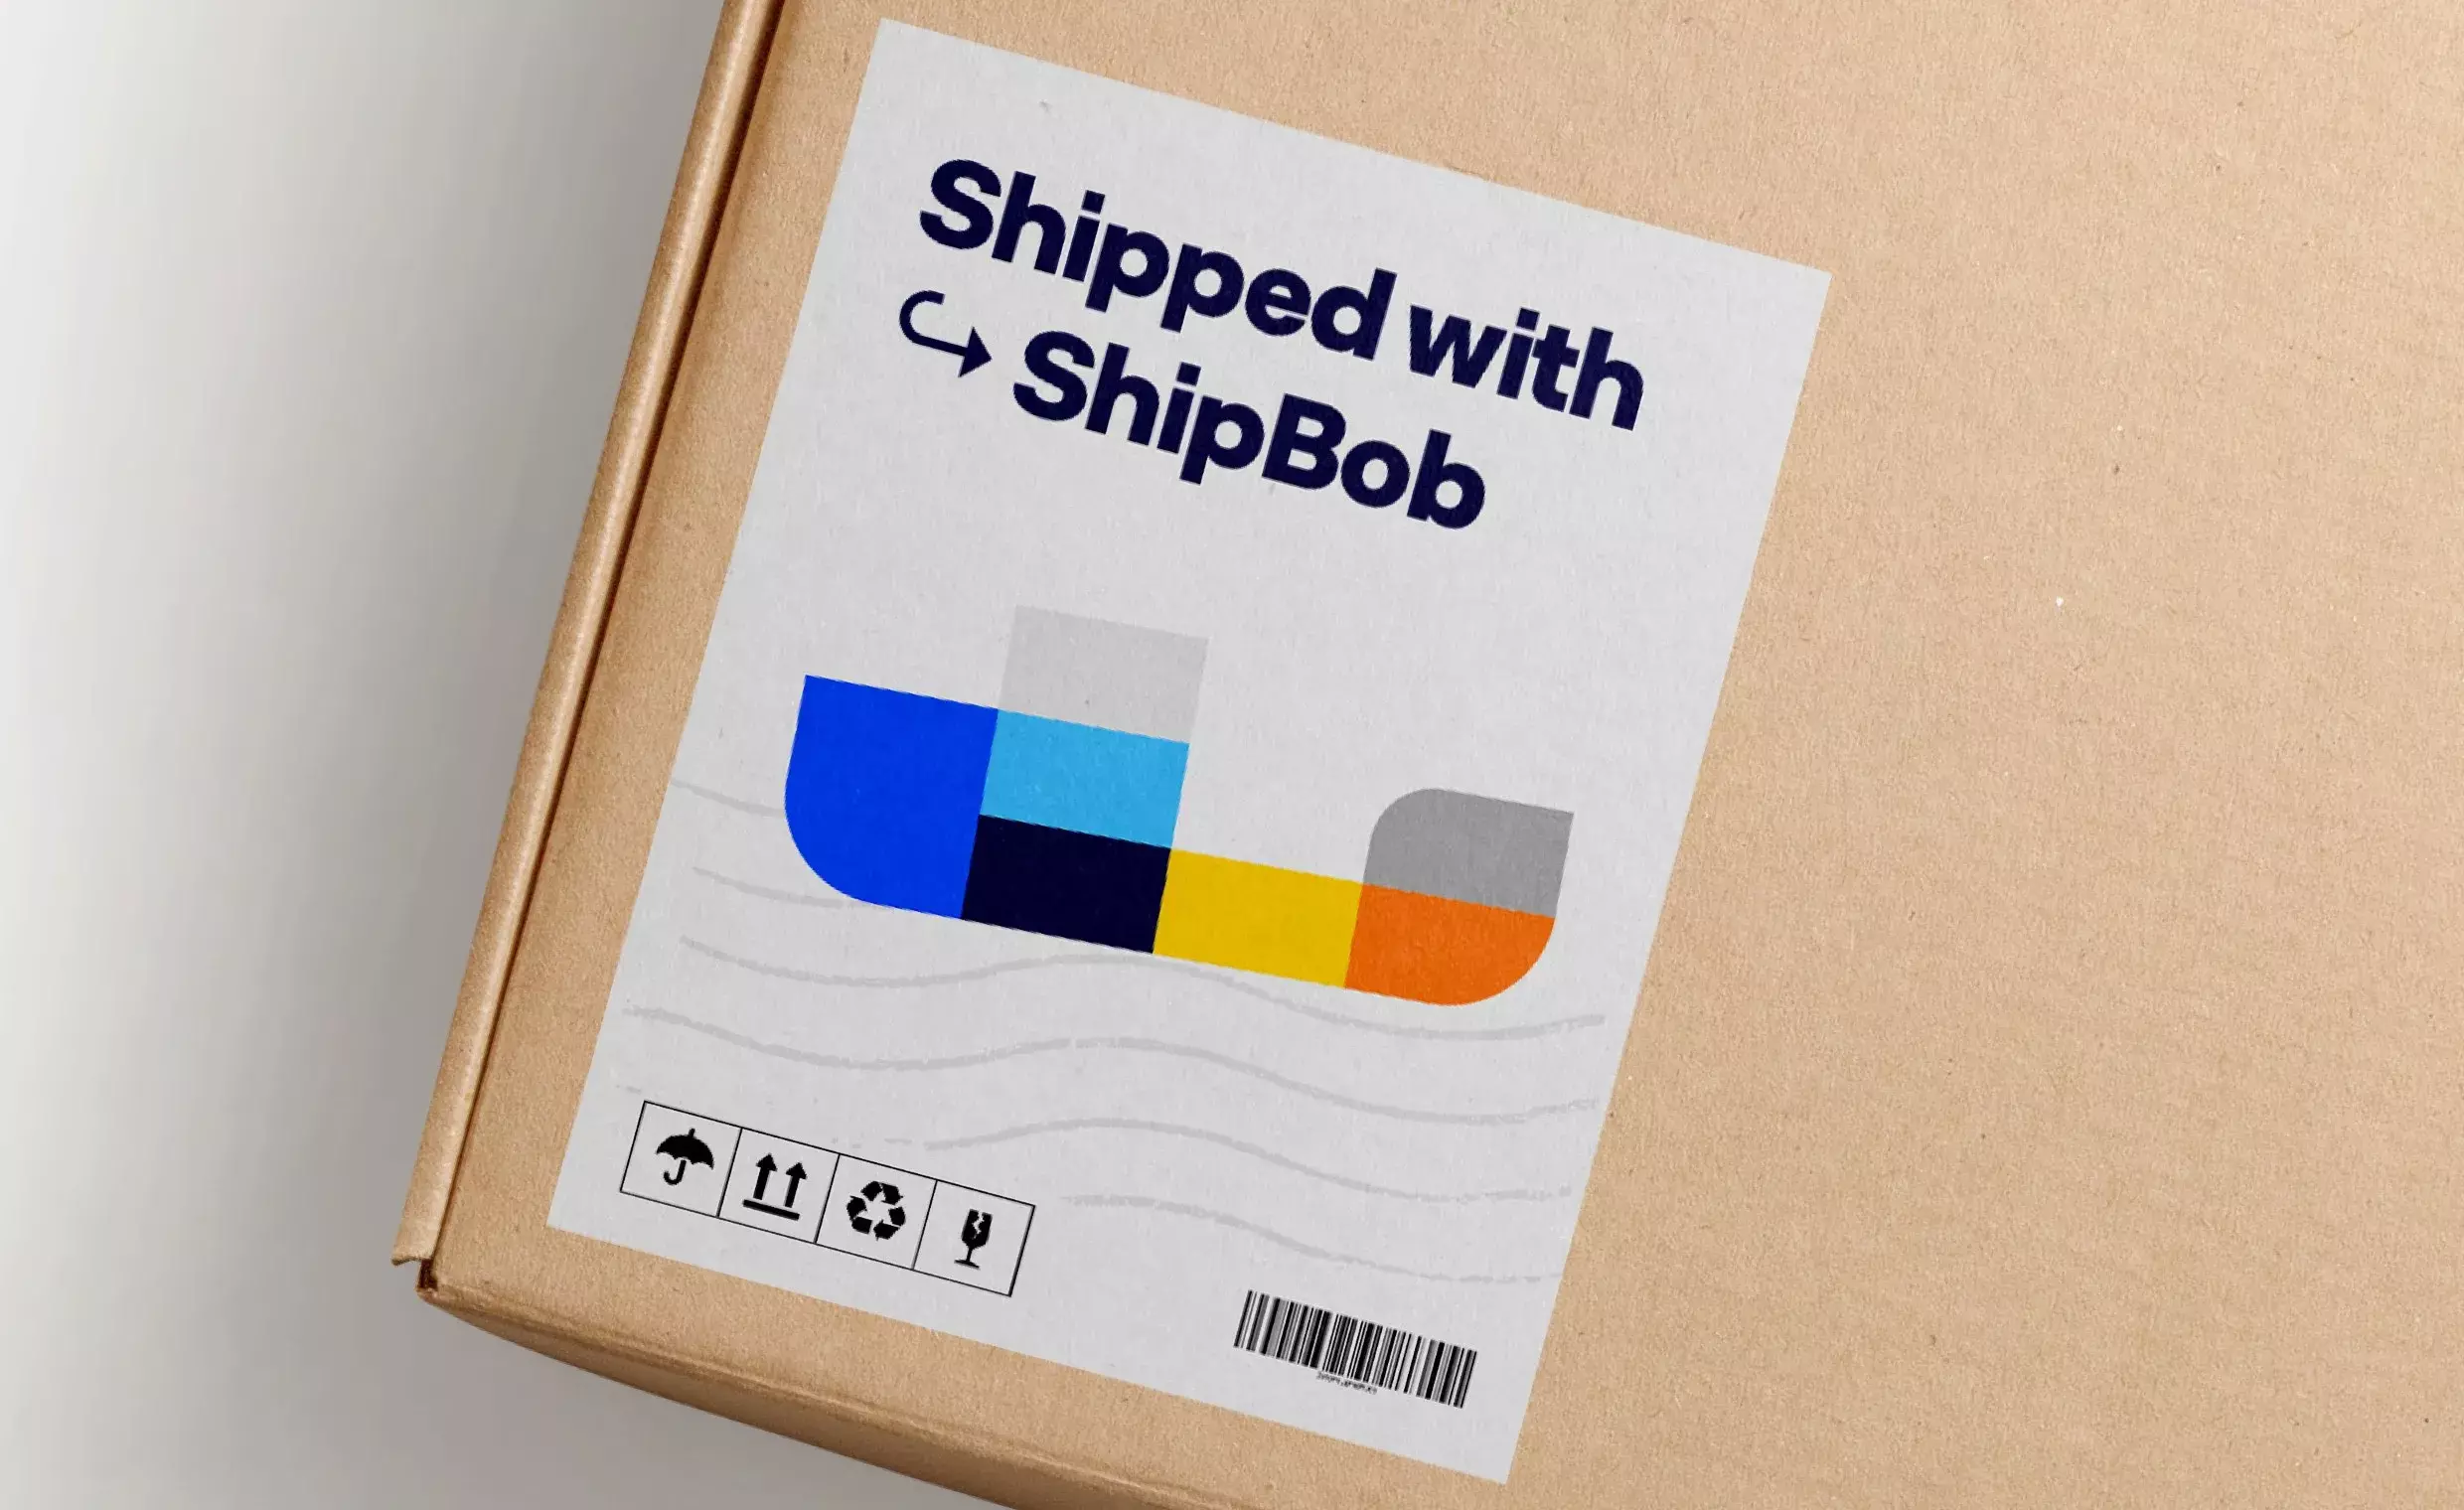 Shipbob branded box simulation by BB Agency